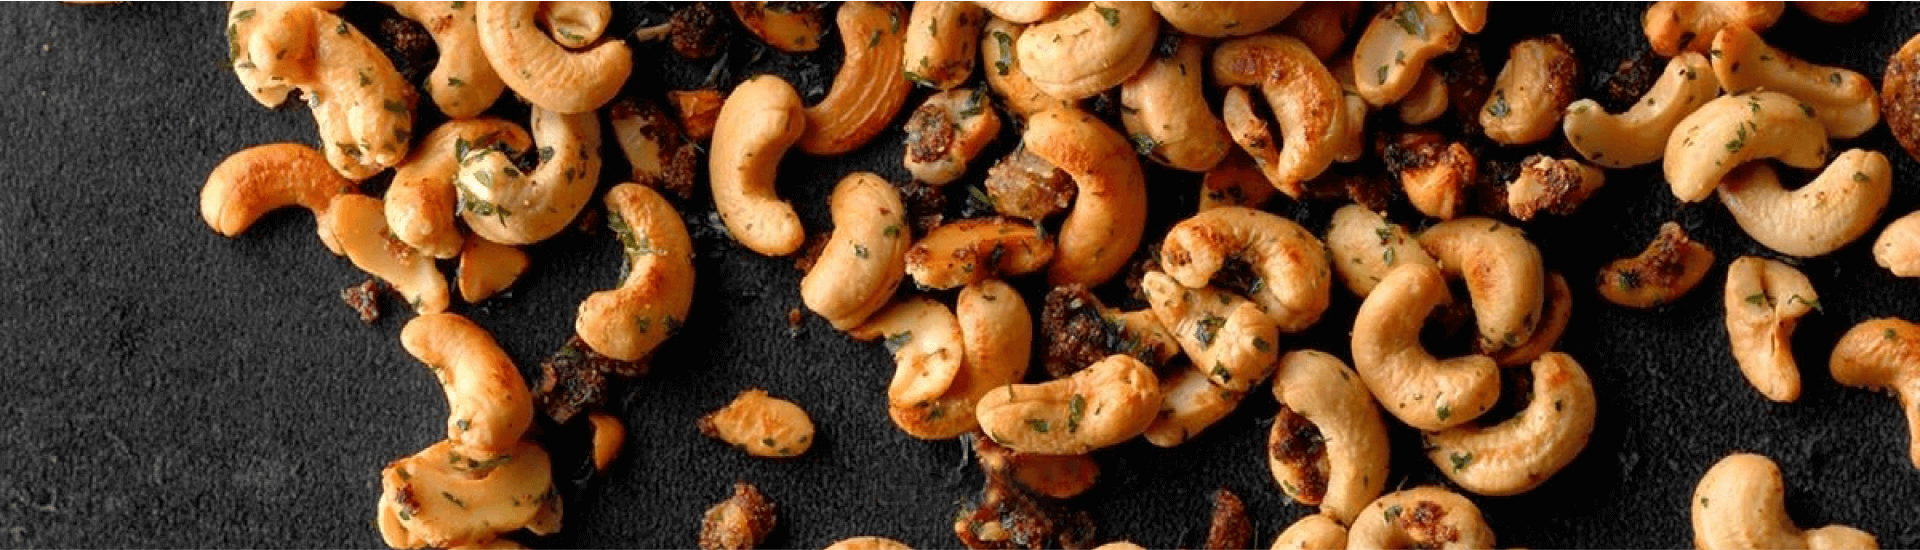 Achal cashew nuts